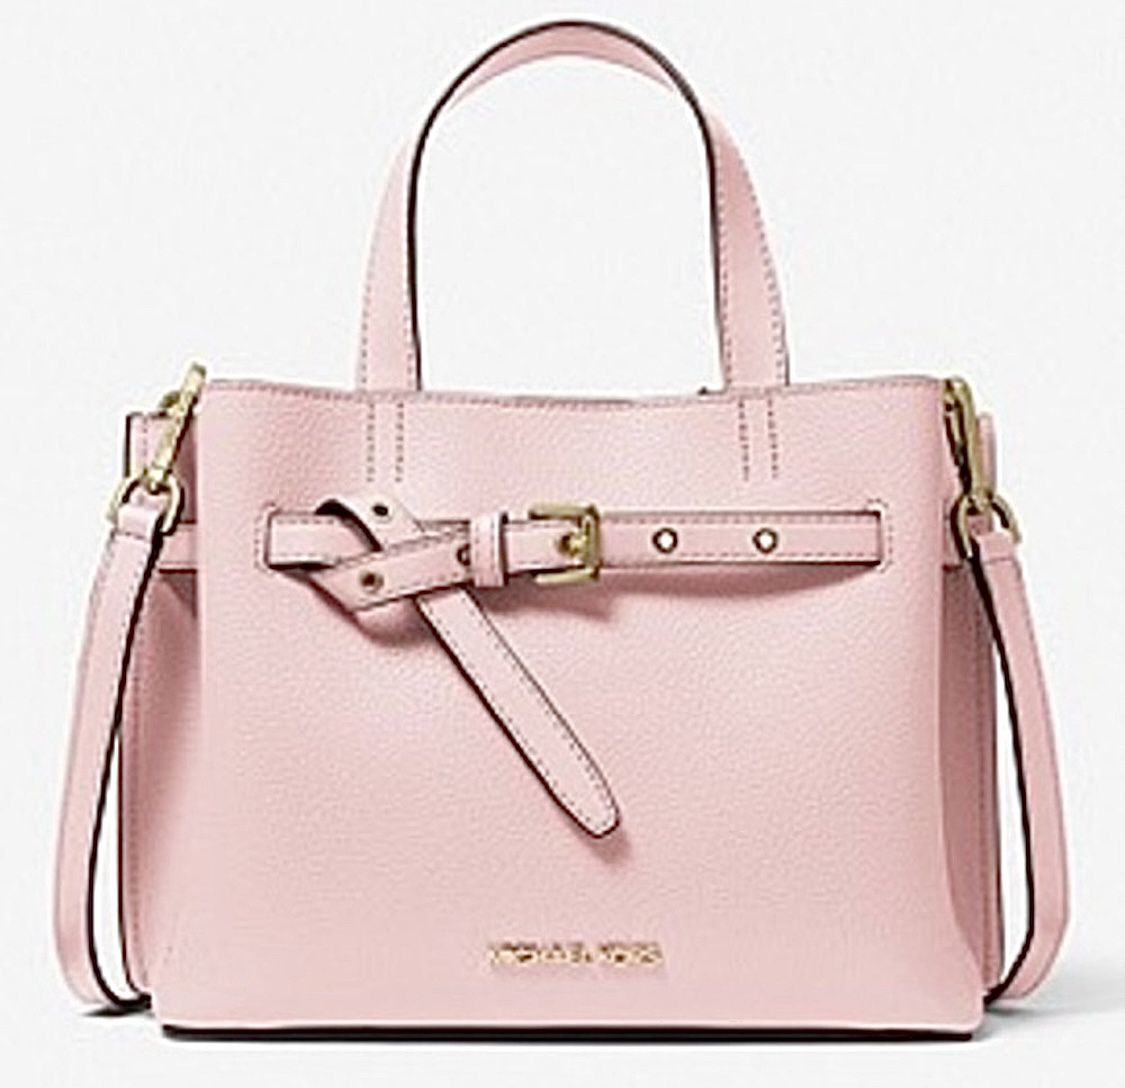 New Michael Kors Blush Pink Small Pebbled Leather Satchel Crossbody Bag